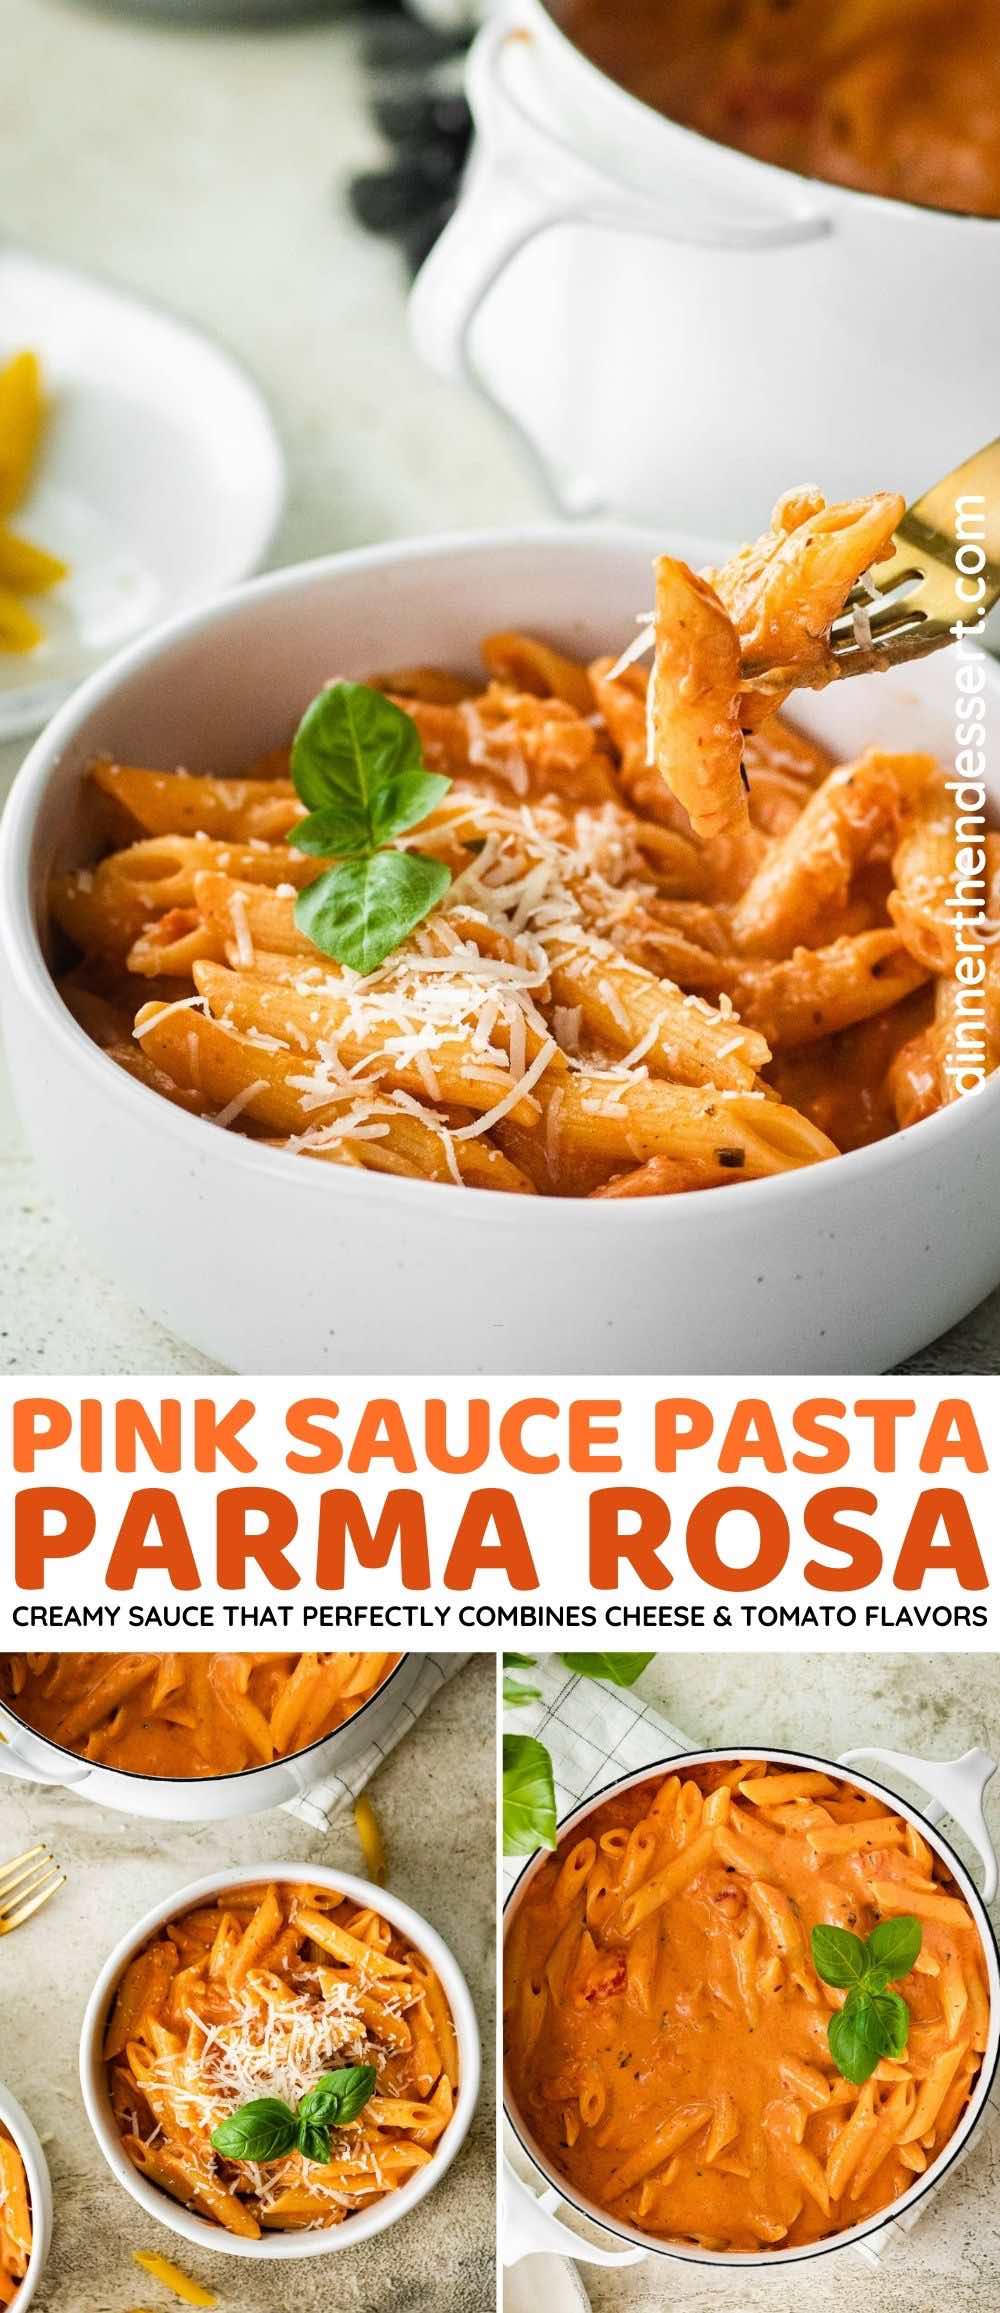 https://dinnerthendessert.com/wp-content/uploads/2021/06/Pink-Sauce-Pasta-Parma-Rosa-L.jpg